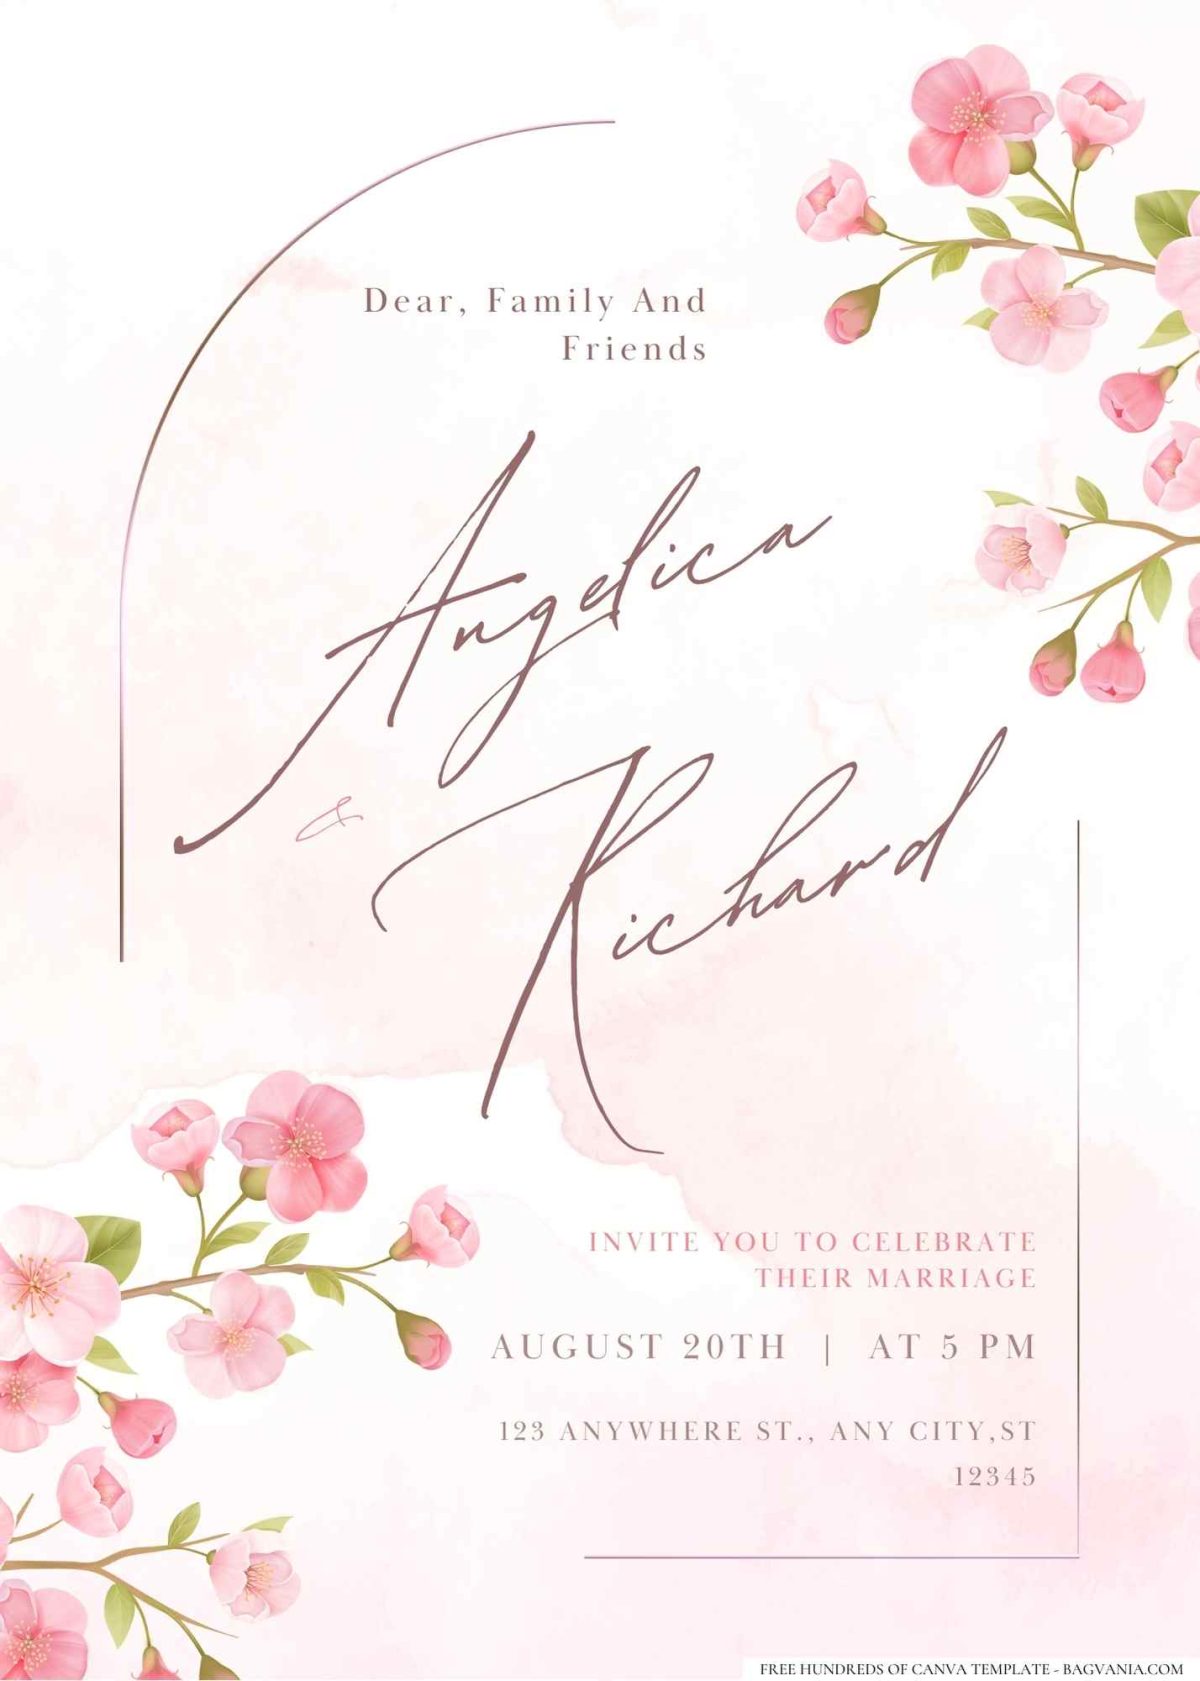 FREE Editable Cherry blossom-inspired for a romantic feel wedding invitation